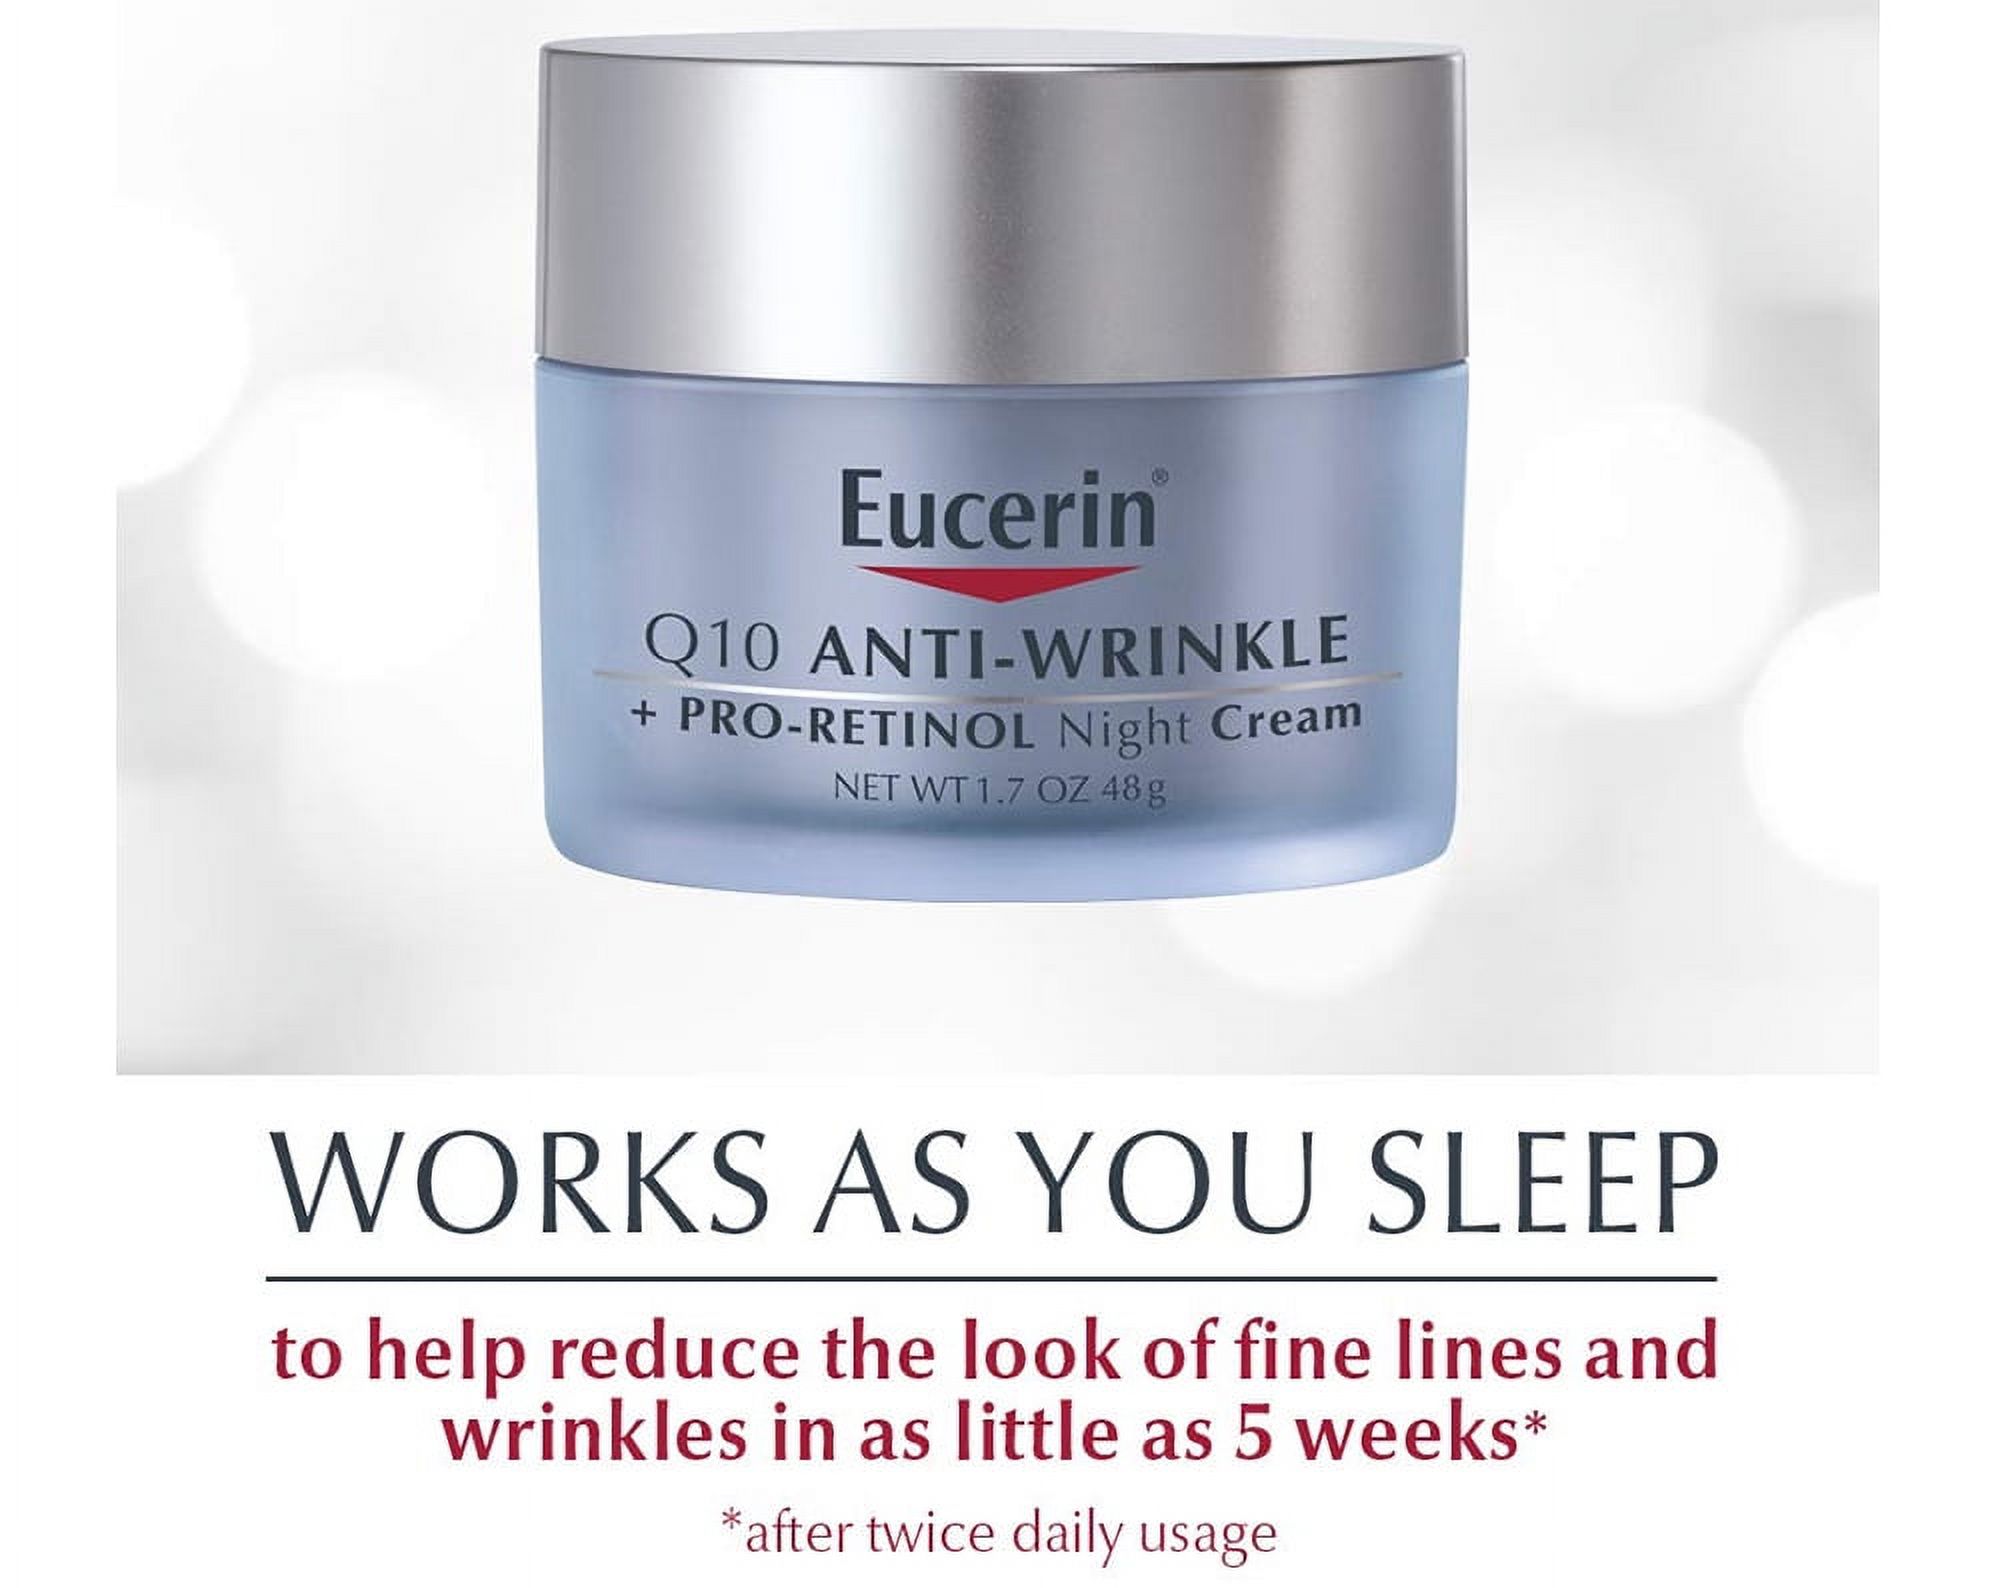 Eucerin Q10 Anti-Wrinkle Night Cream + Pro-Retinol, Facial Cream for Sensitive Skin, 1.7 Oz Jar - image 4 of 4